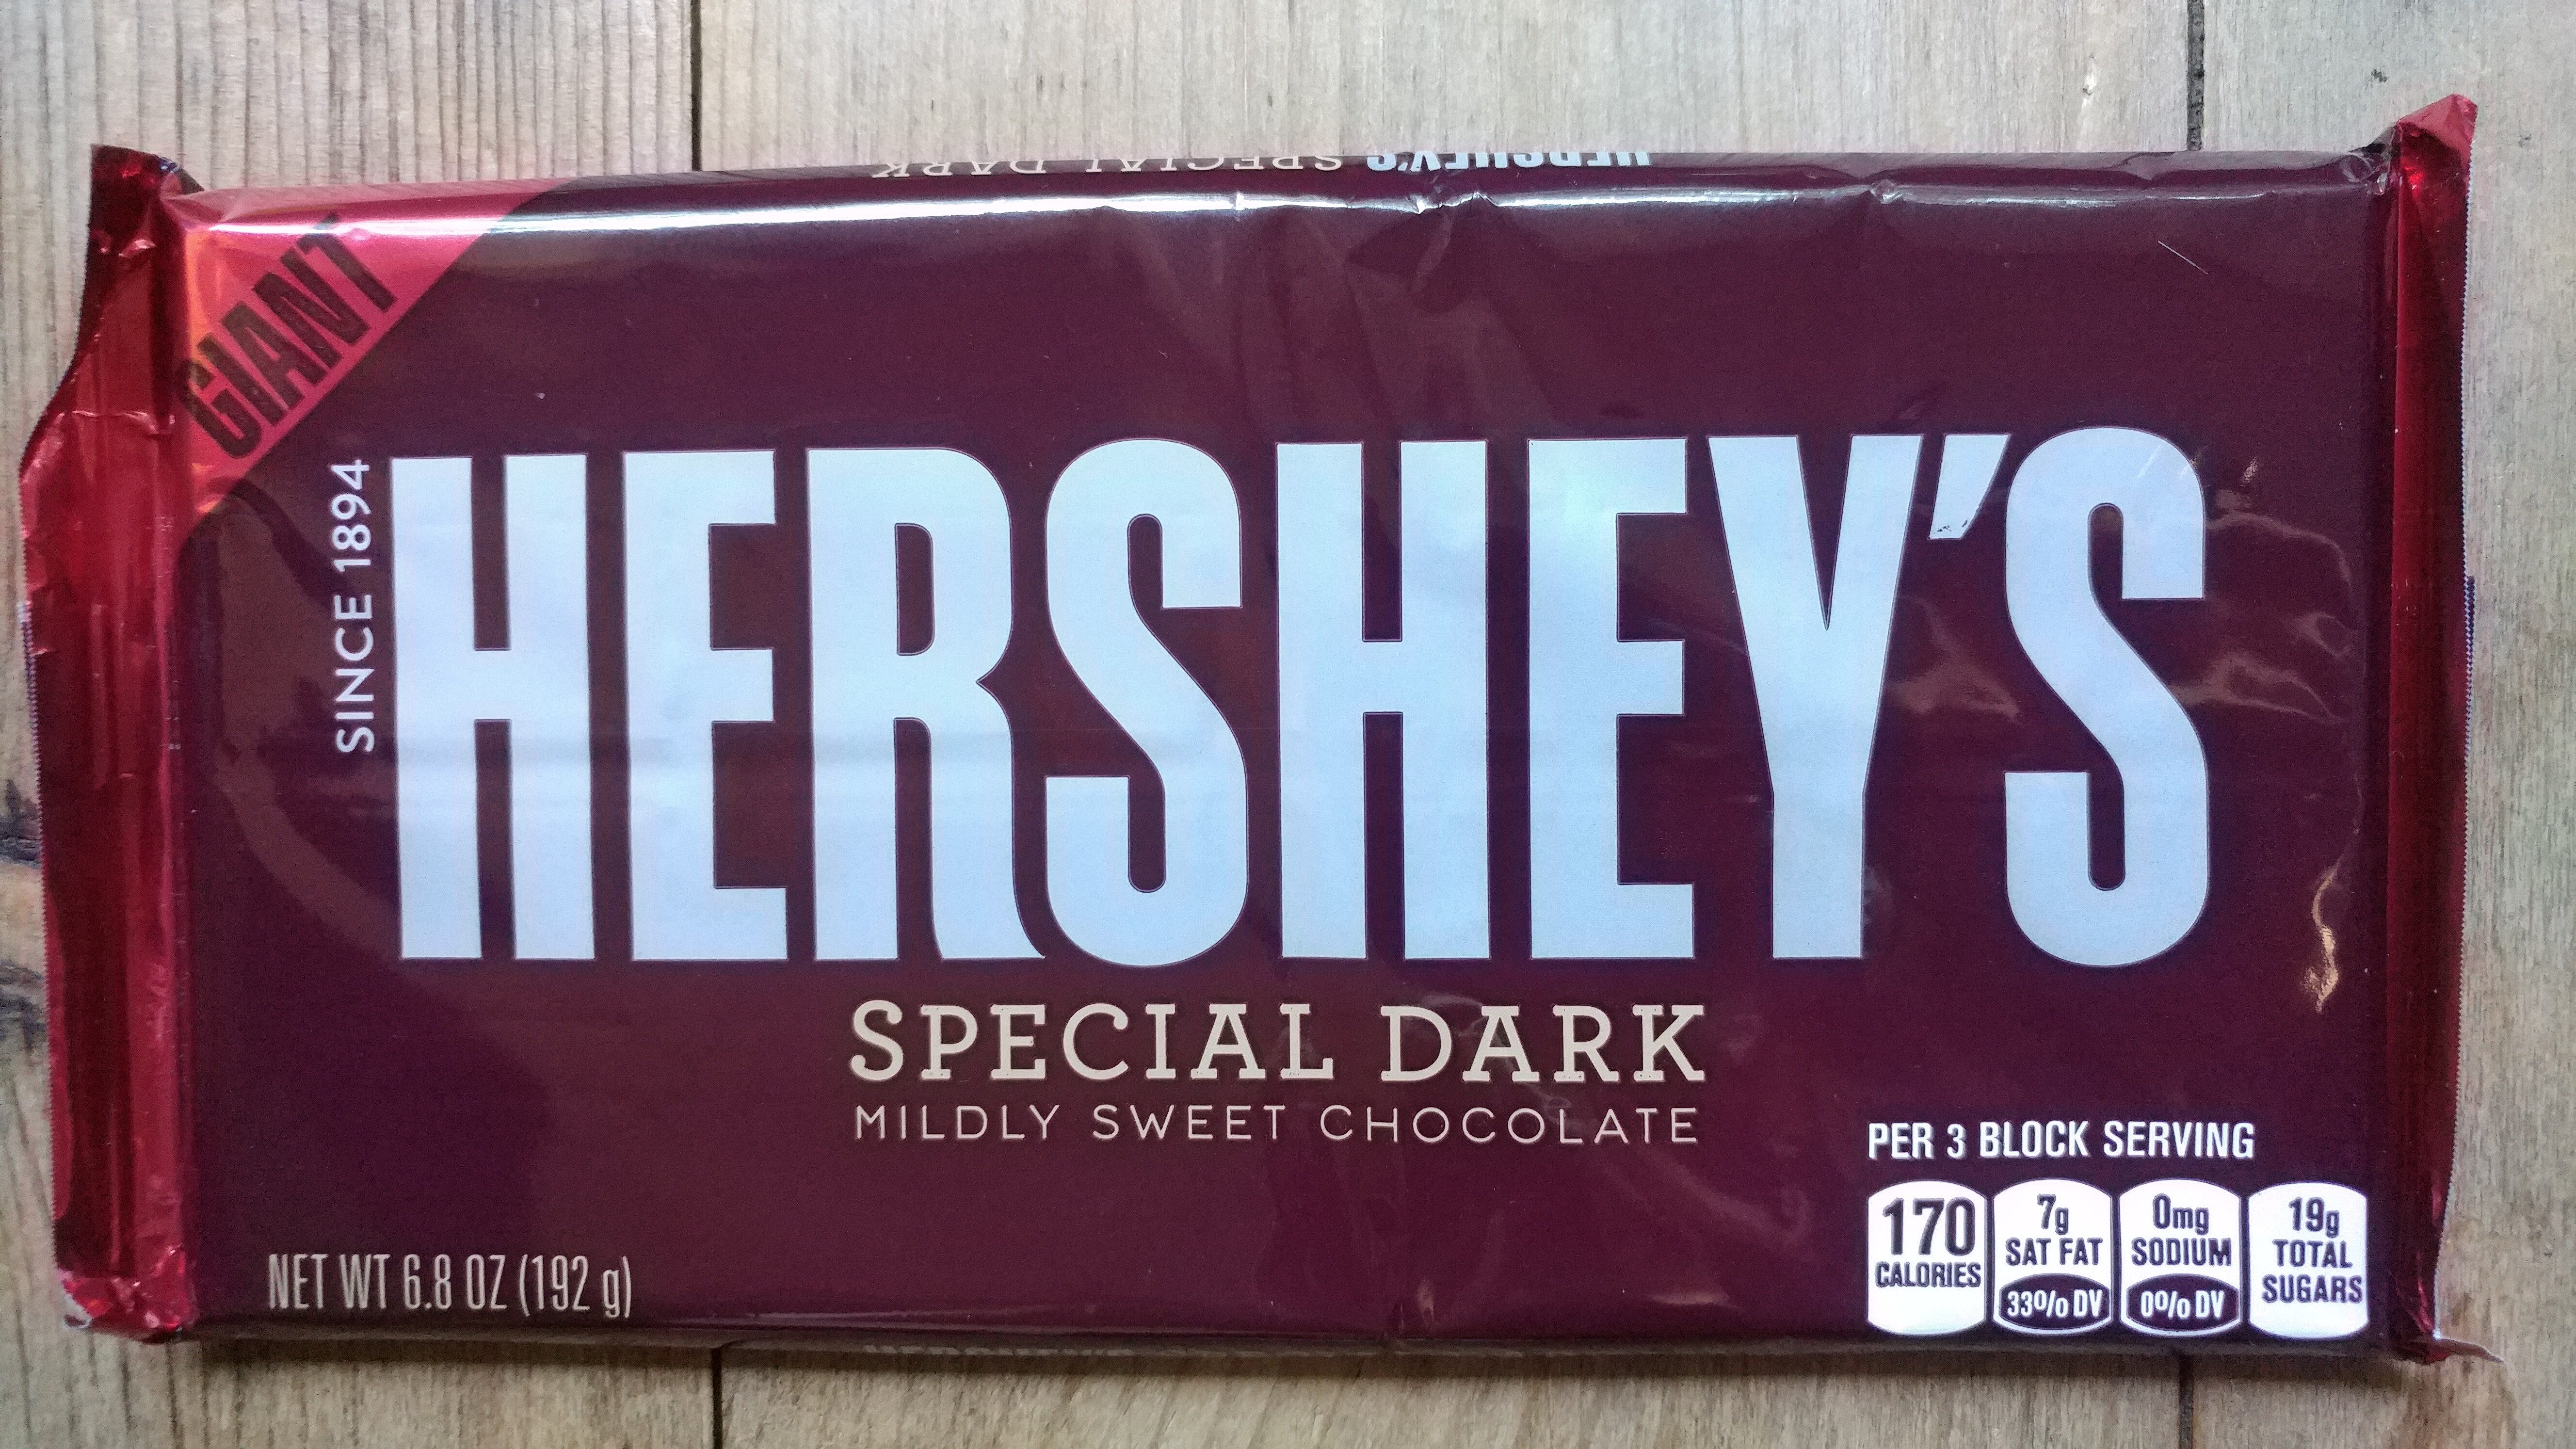 Special Dark - Mildly Sweet Chocolate (Giant Bar) - Product - en